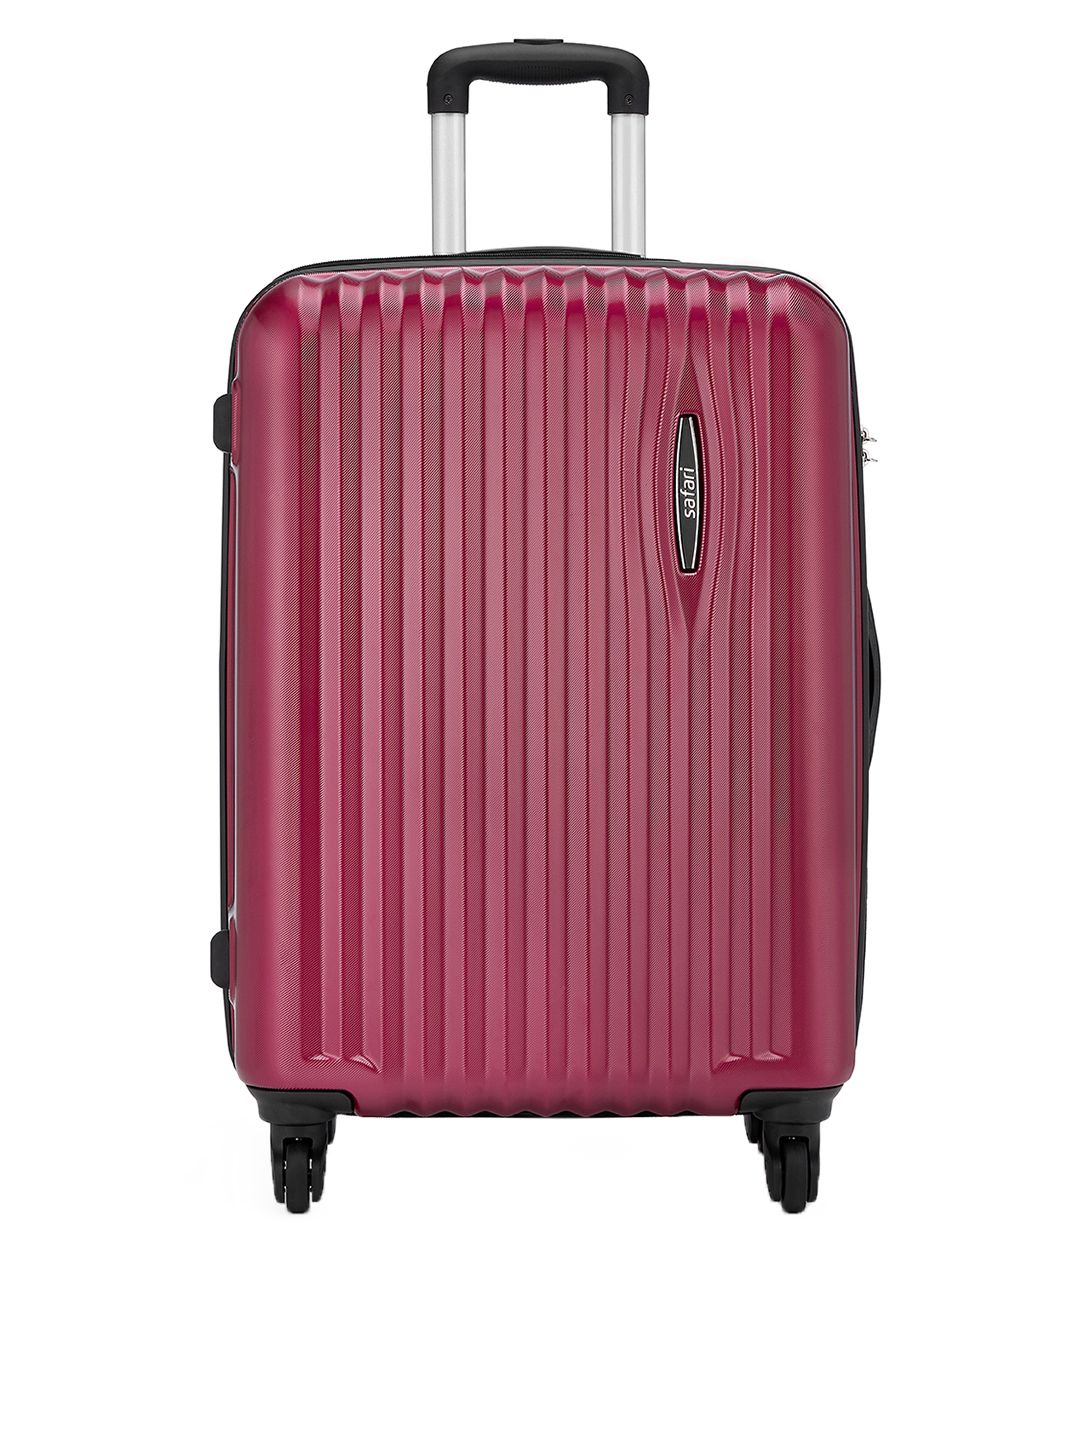 Safari Red 79 cm Premium Hardsided Trolley Suitcase Price in India